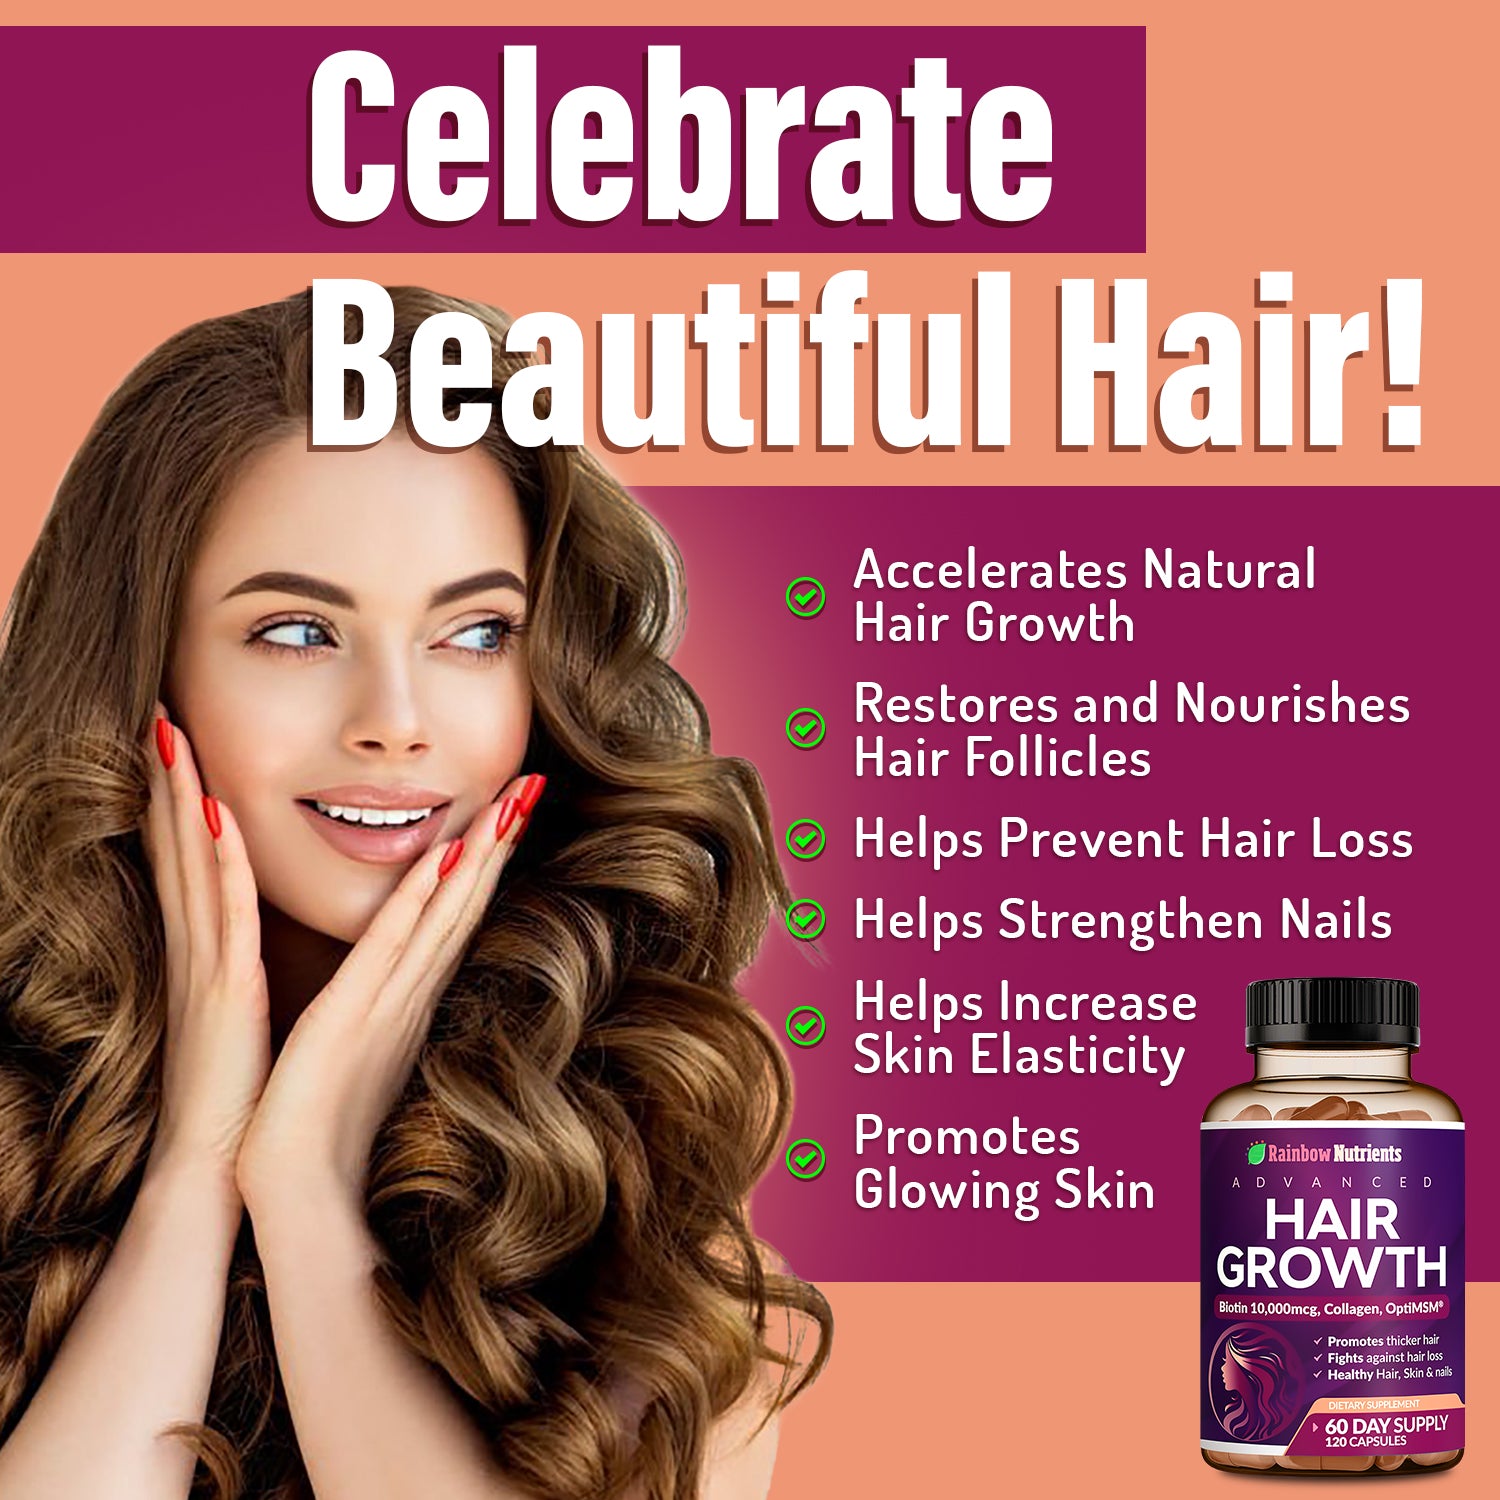 Celebrate beautiful hair